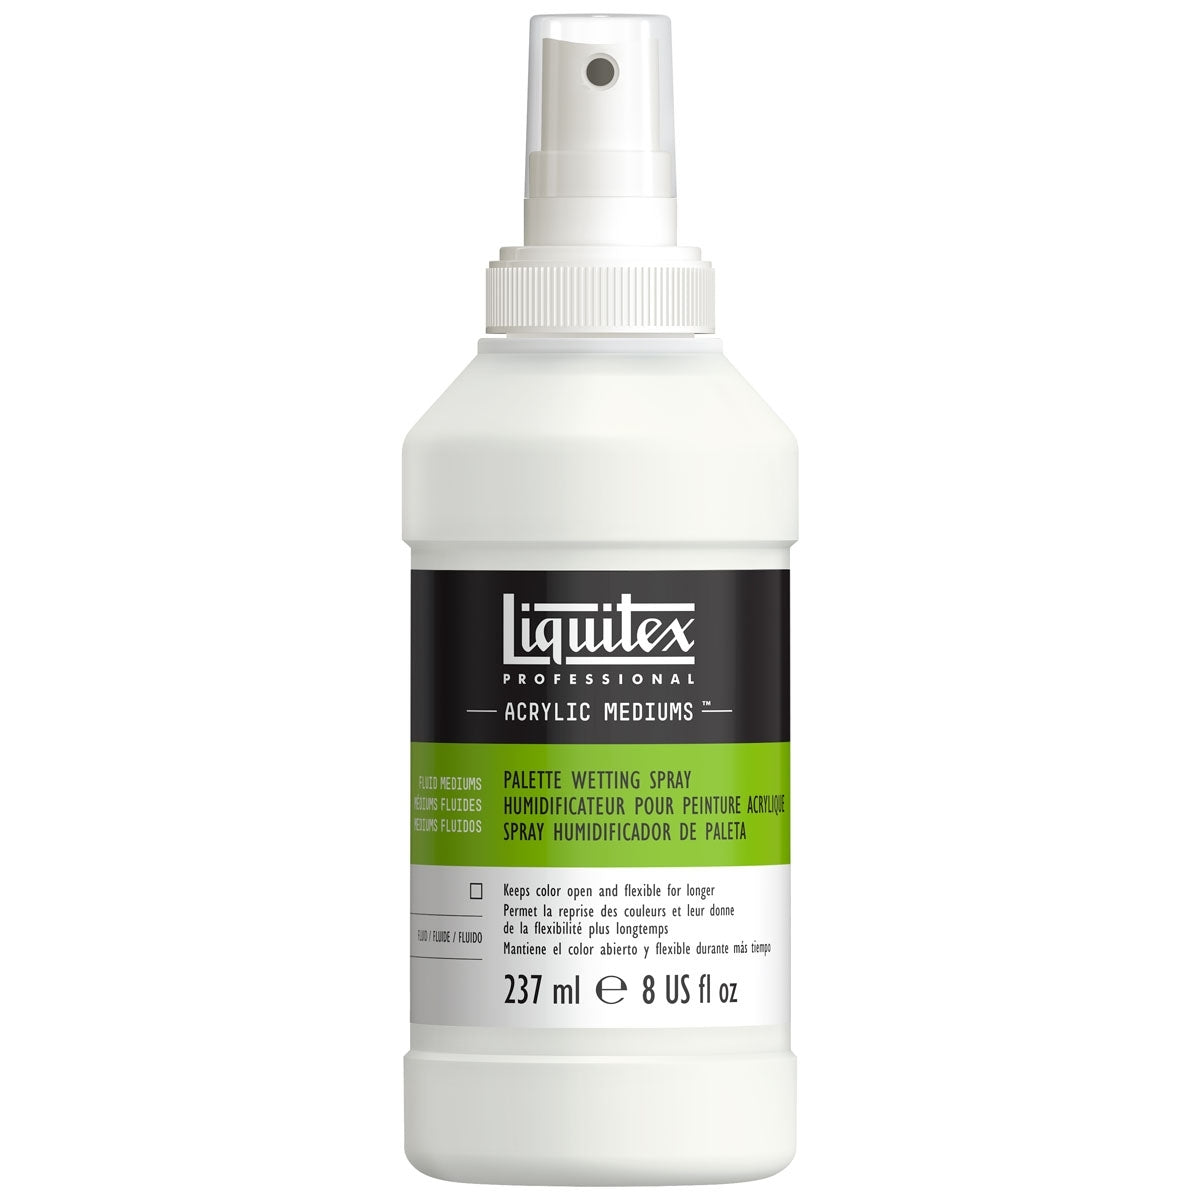 Liquitex - Palette Wetting Spray 237ml